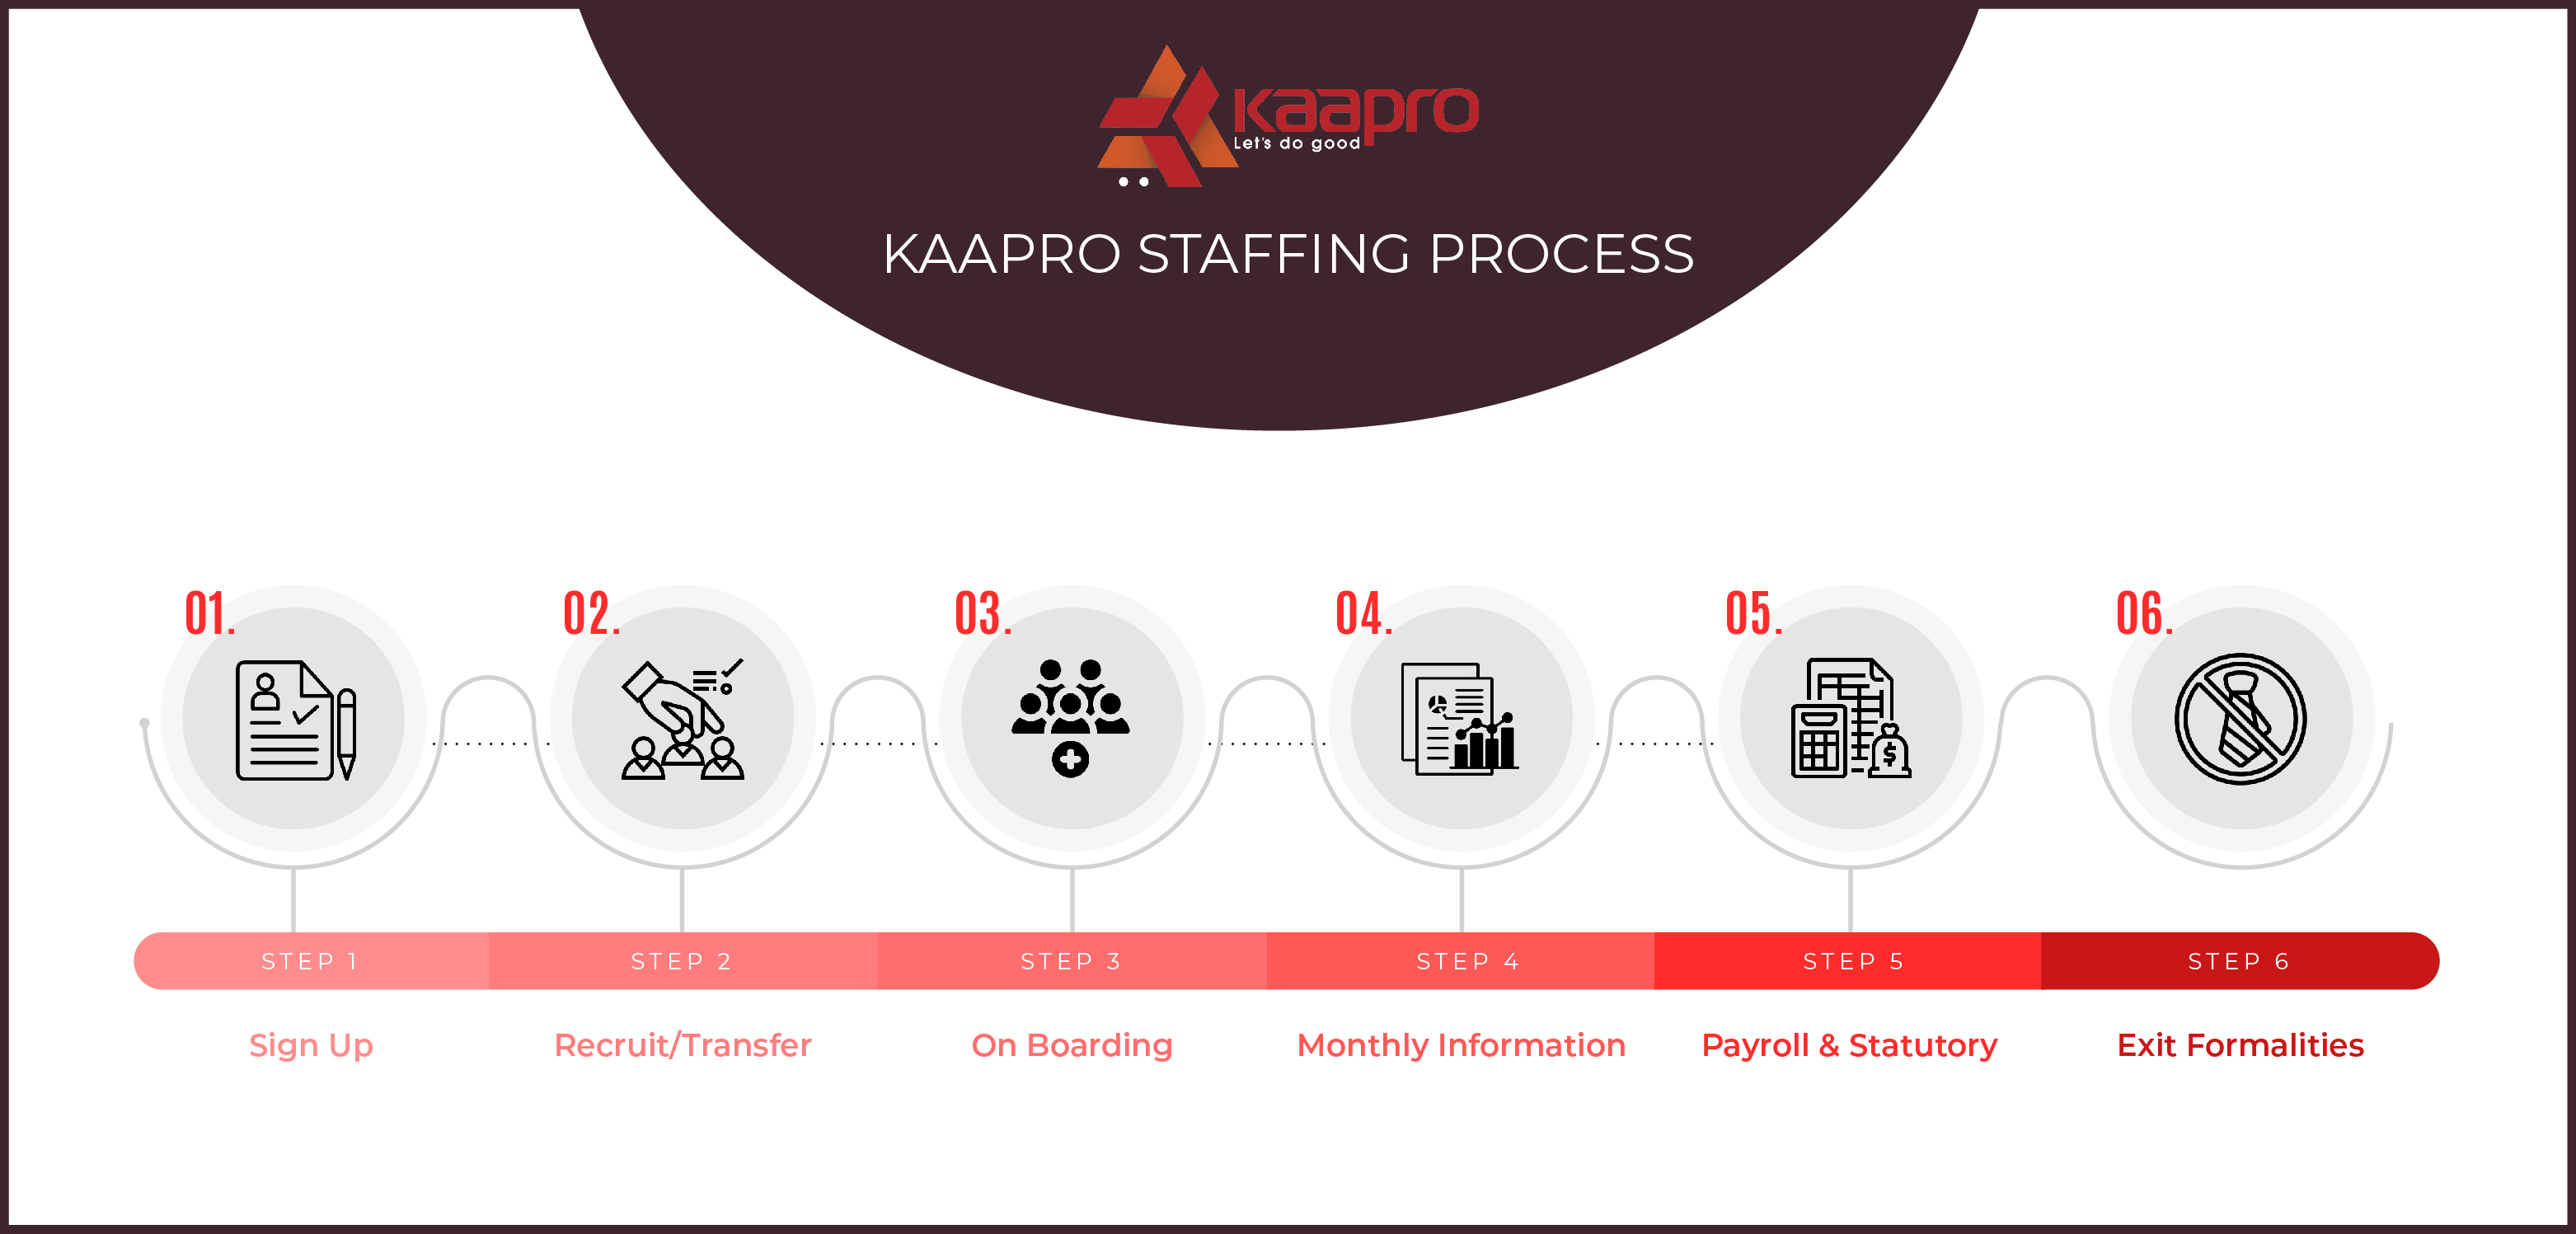 Staffing Process of Kaapro